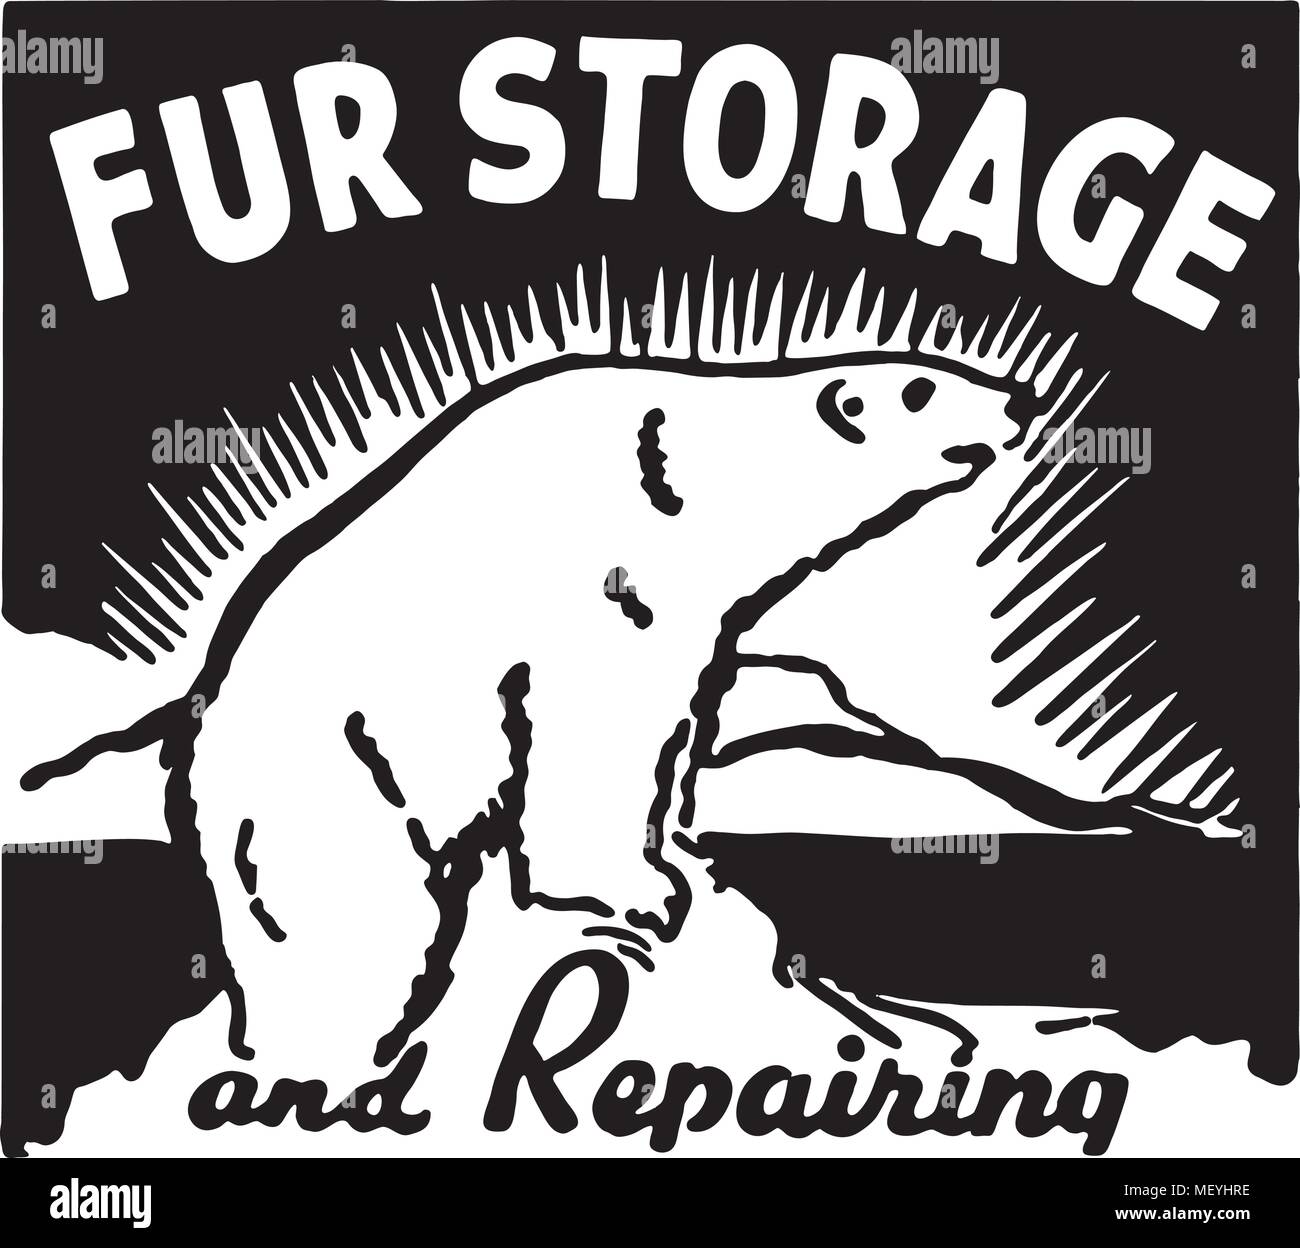 Fur Storage - Retro Ad Art Banner Stock Vector